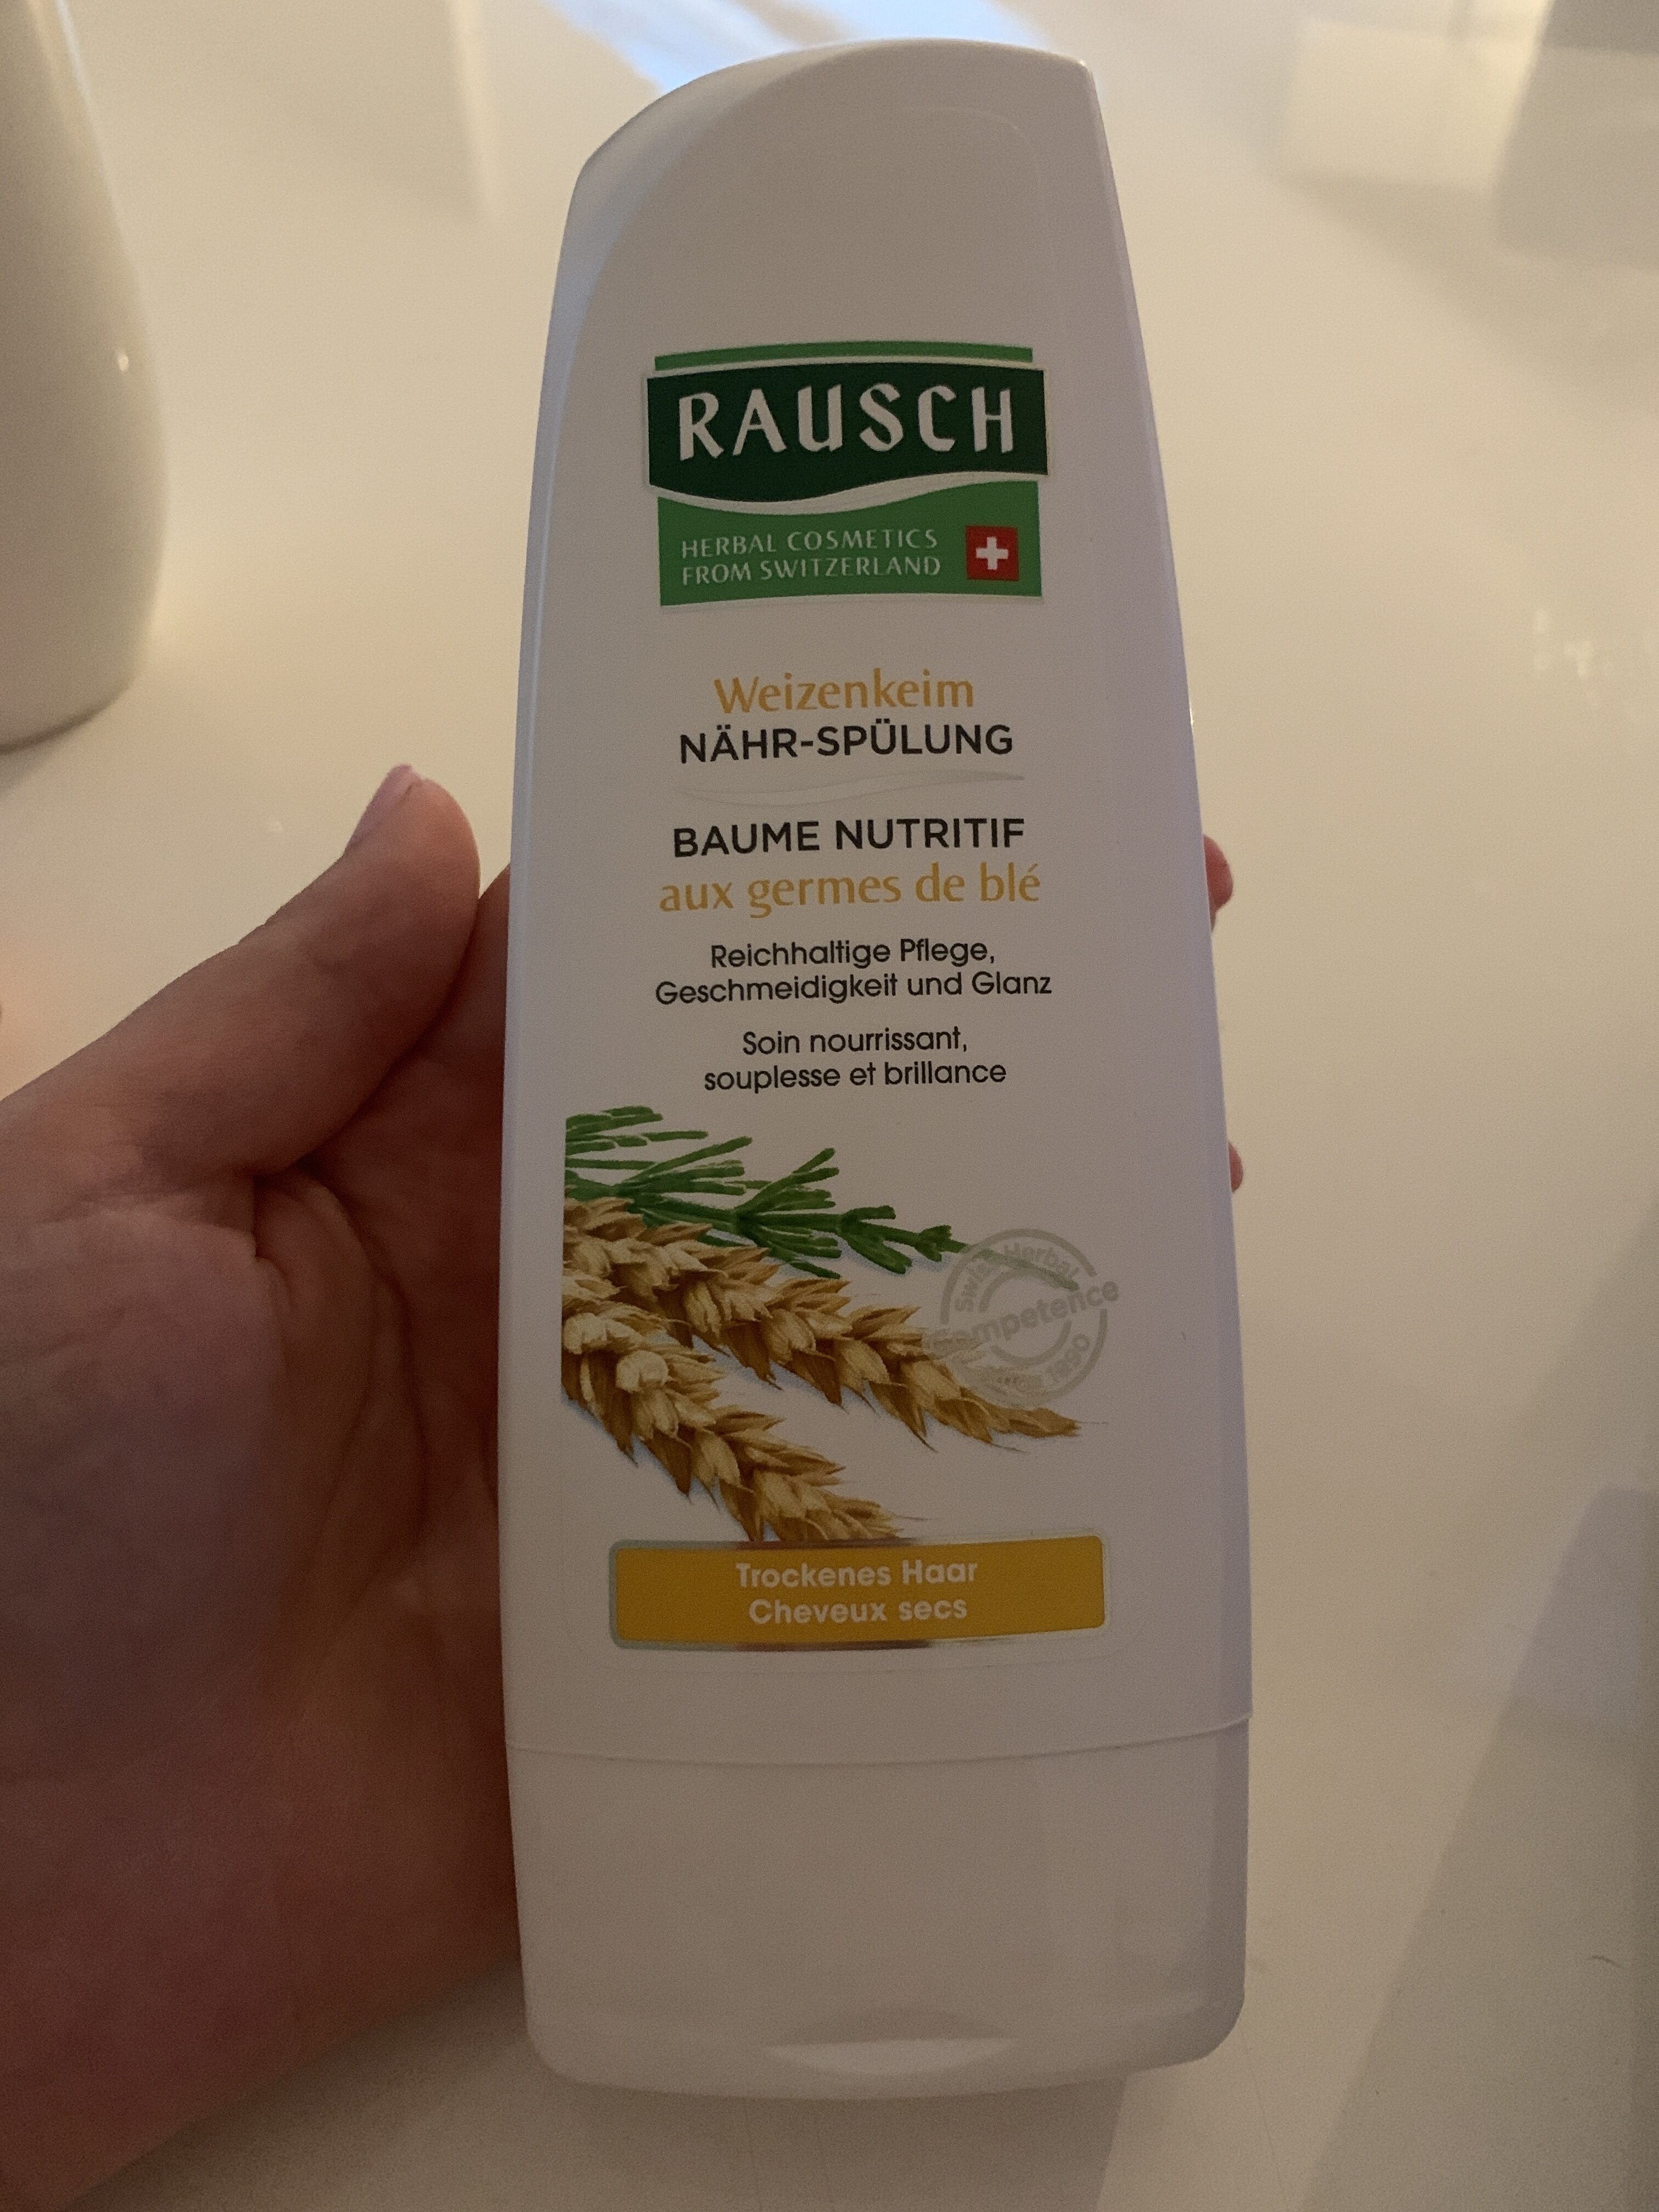 Raush baume nutritif - Product - fr